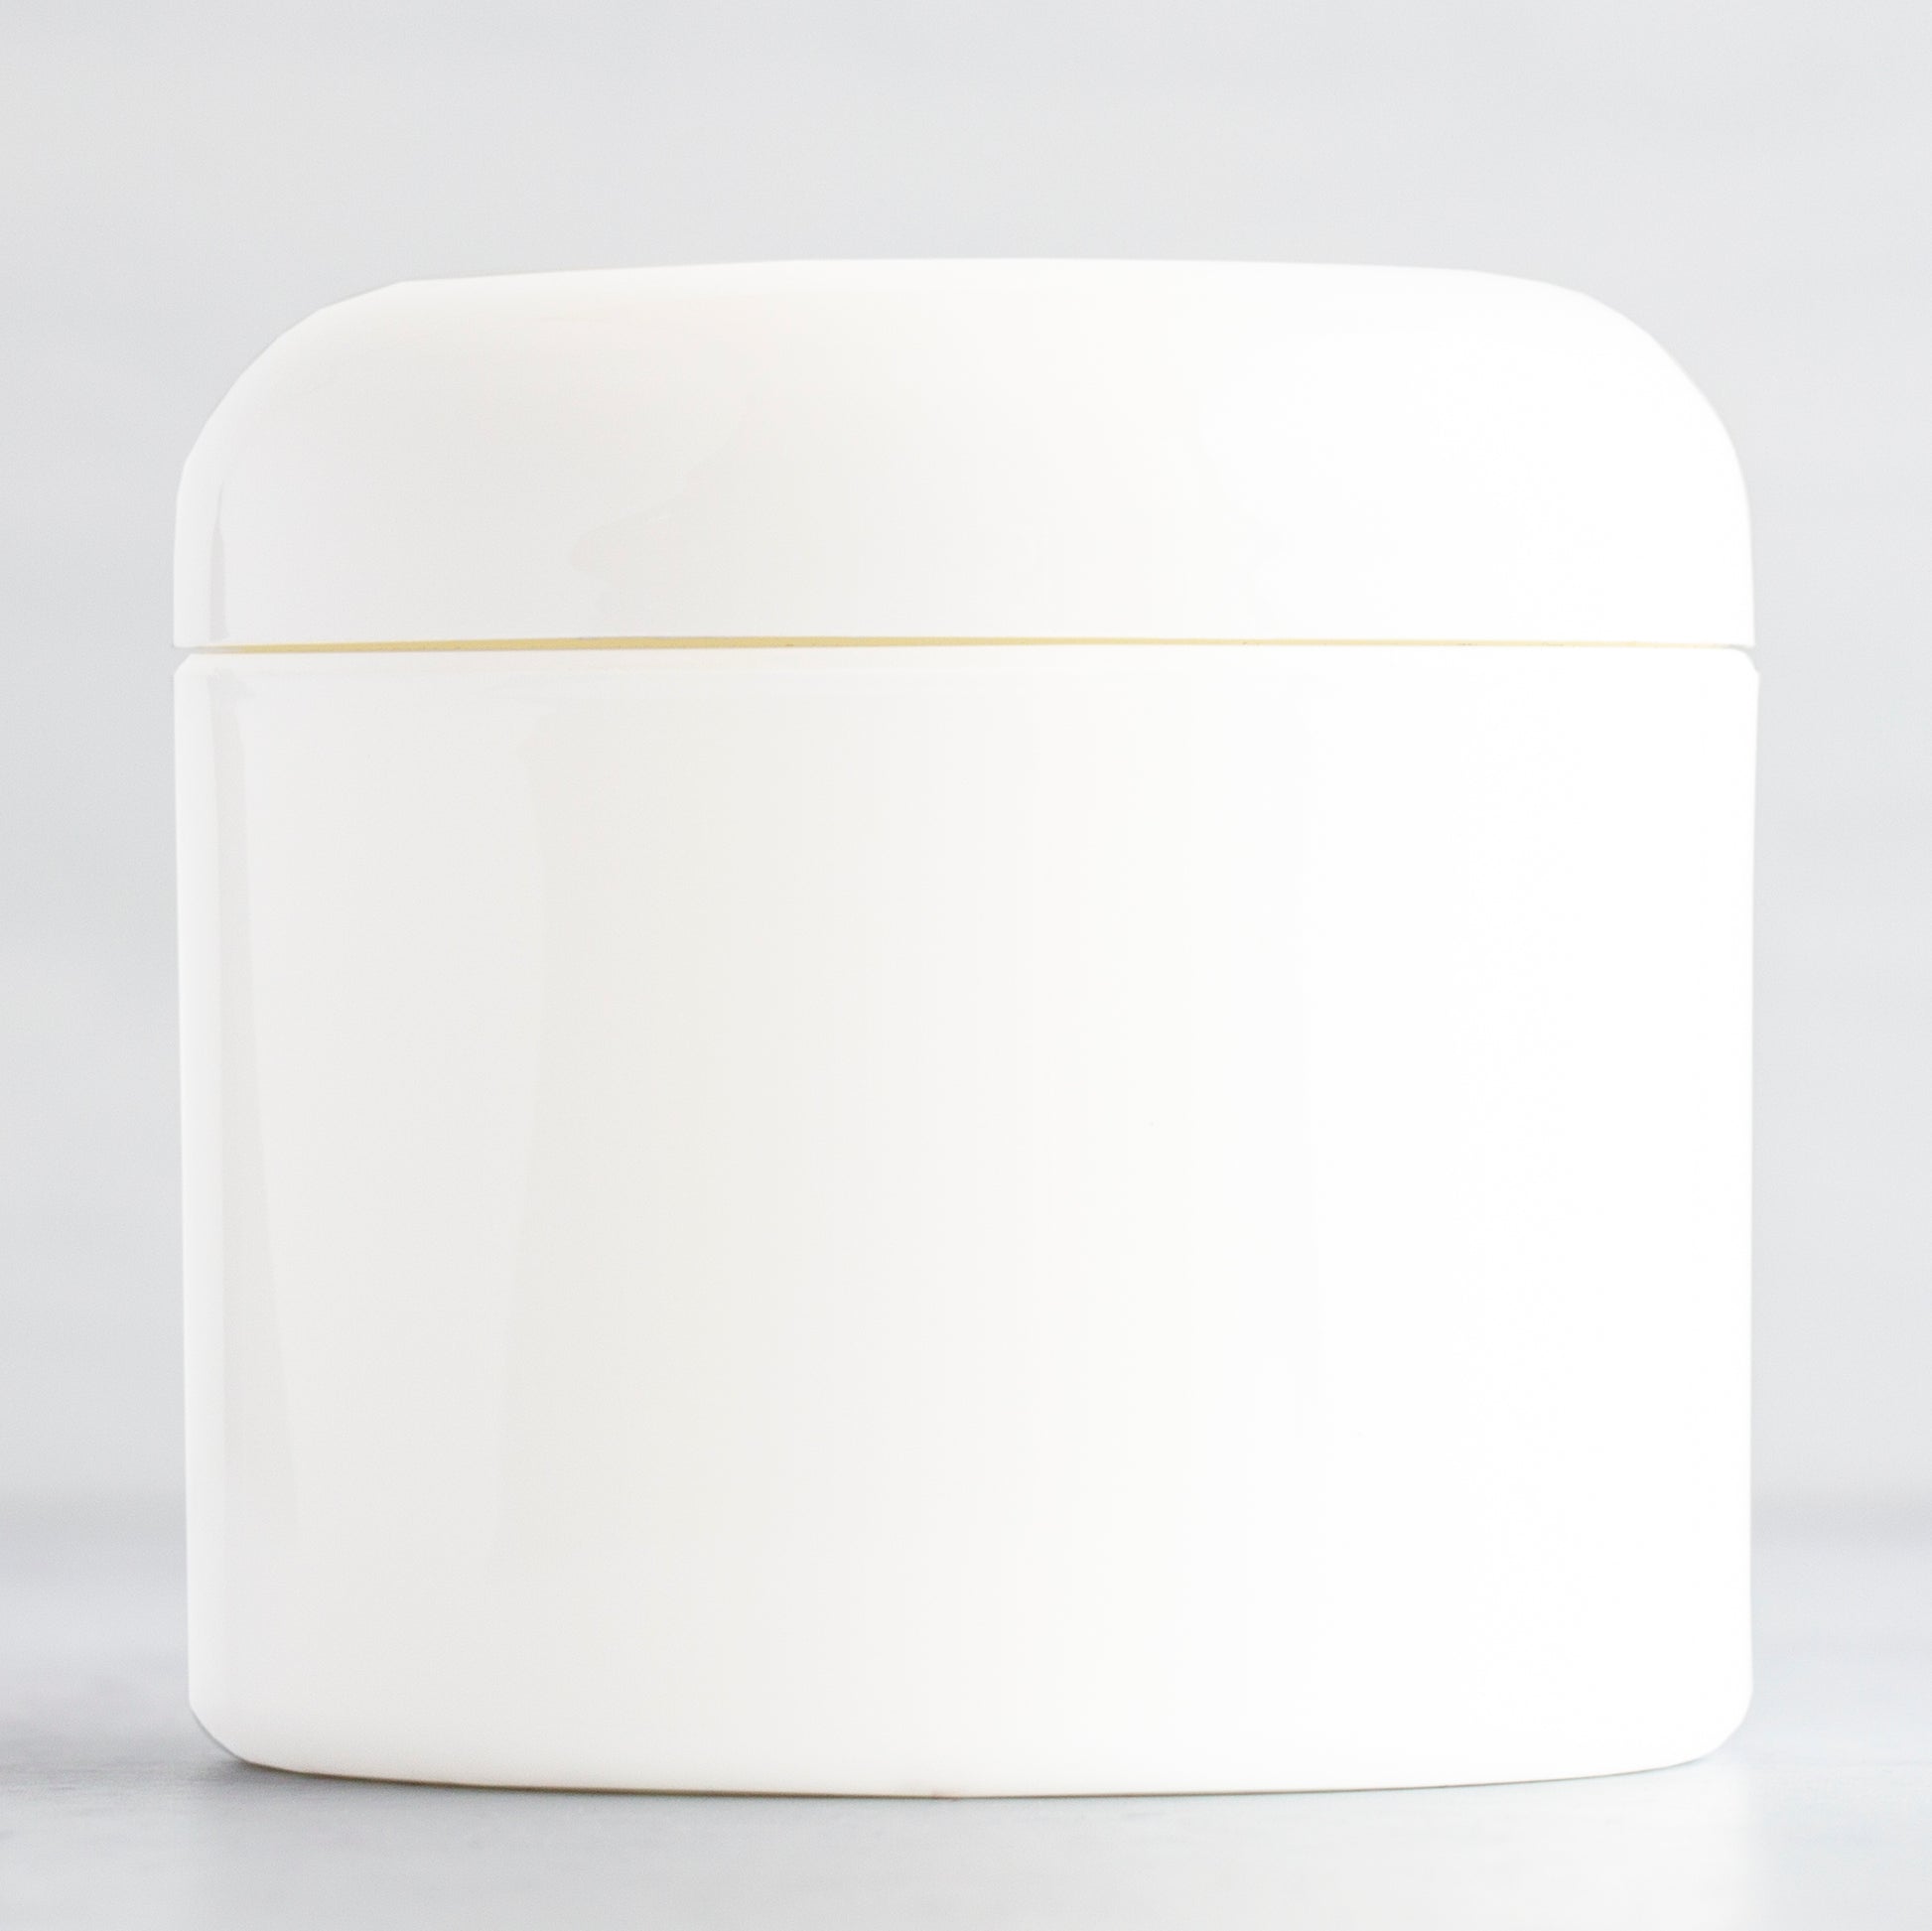 4 oz White Square Base Plastic Jar with White Dome Cap